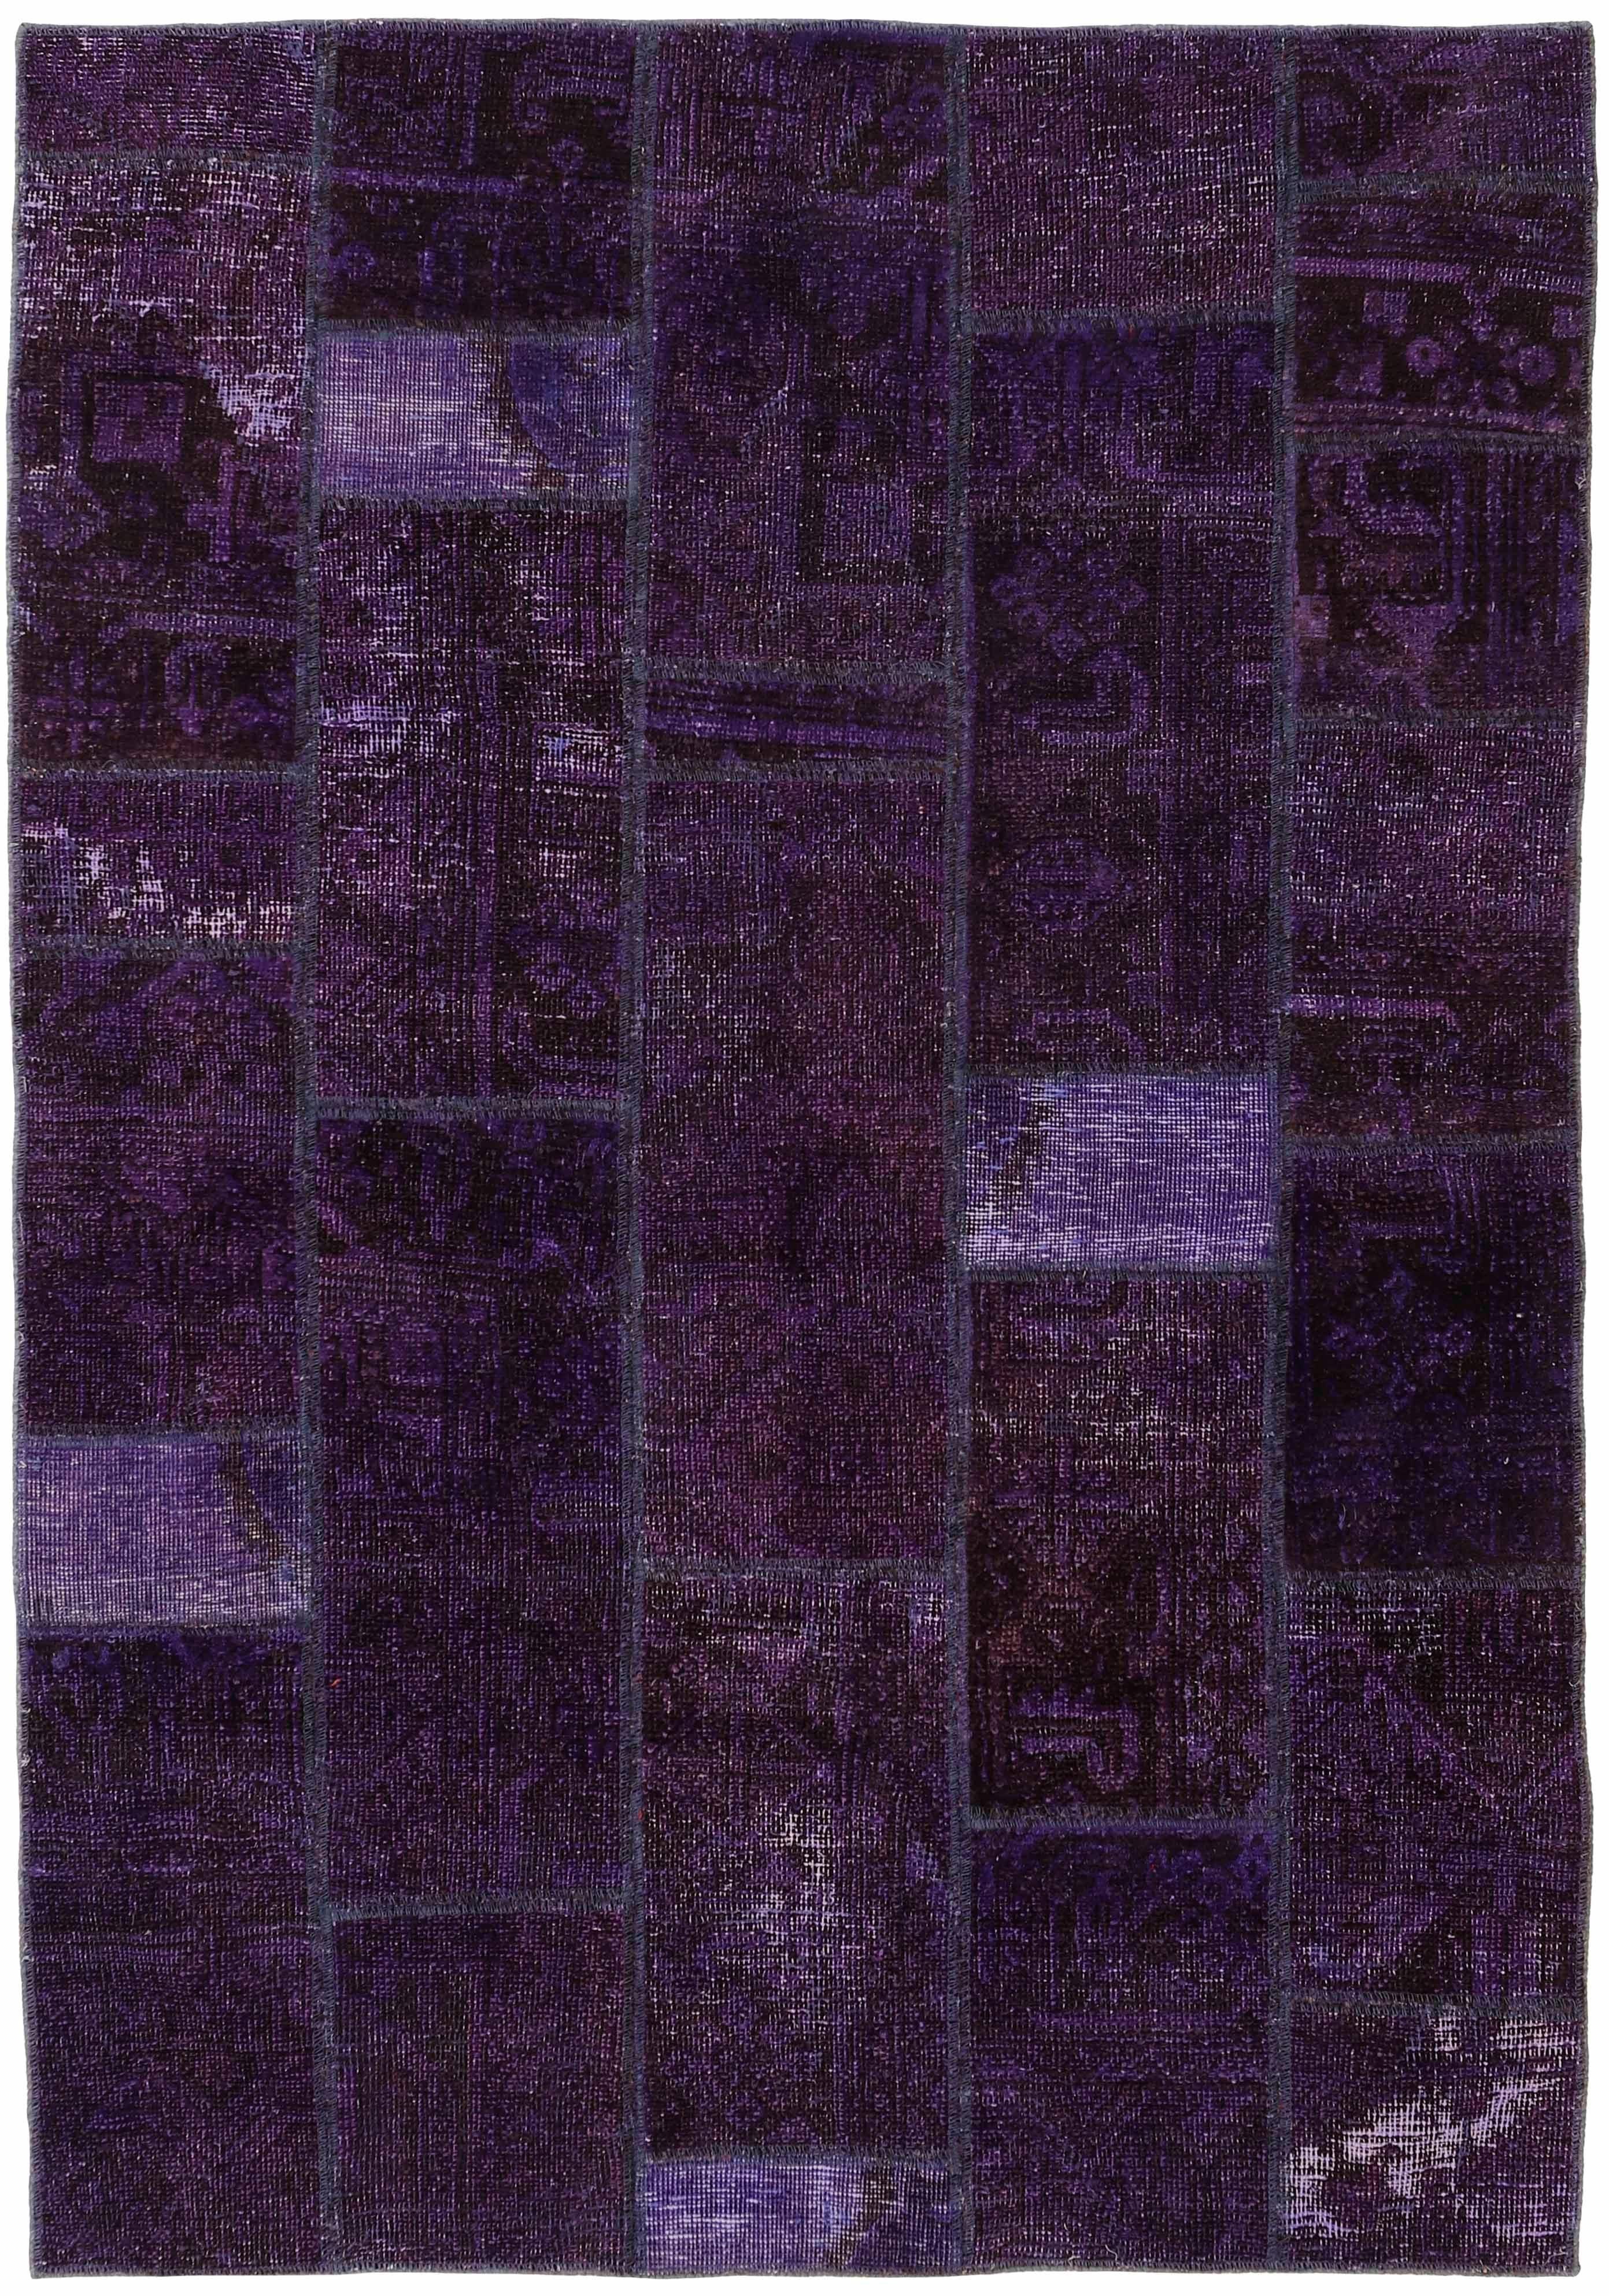 Authentic purple patchwork persian rug